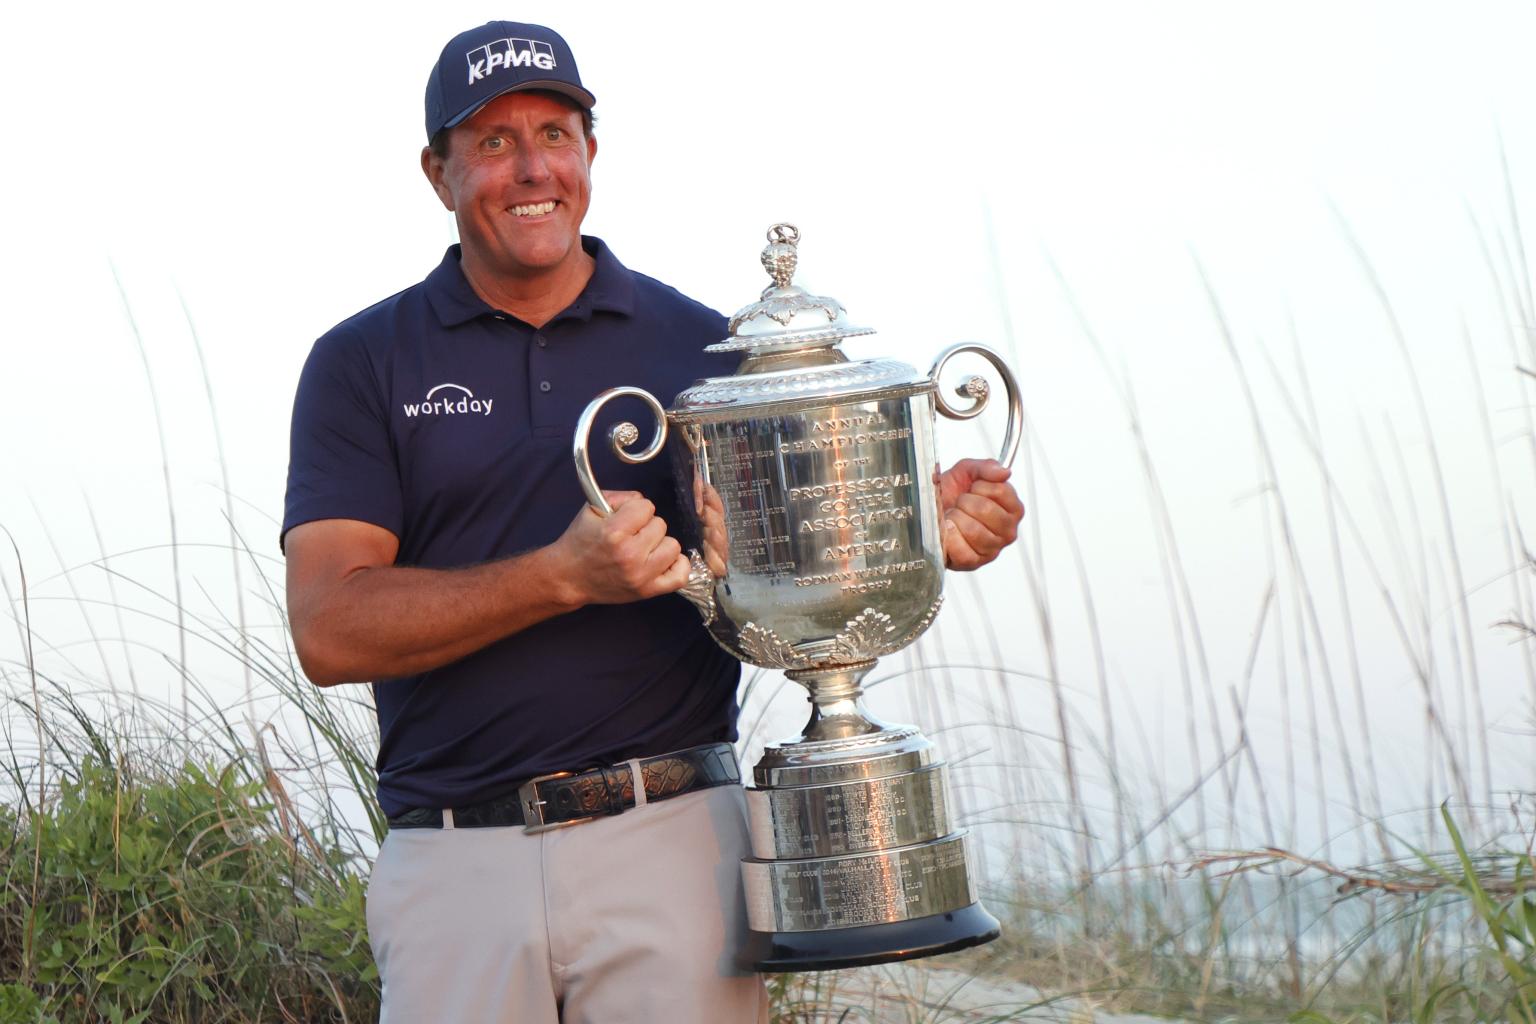 Phil Mickelson MAKES HISTORY by winning the PGA Championship at Kiawah